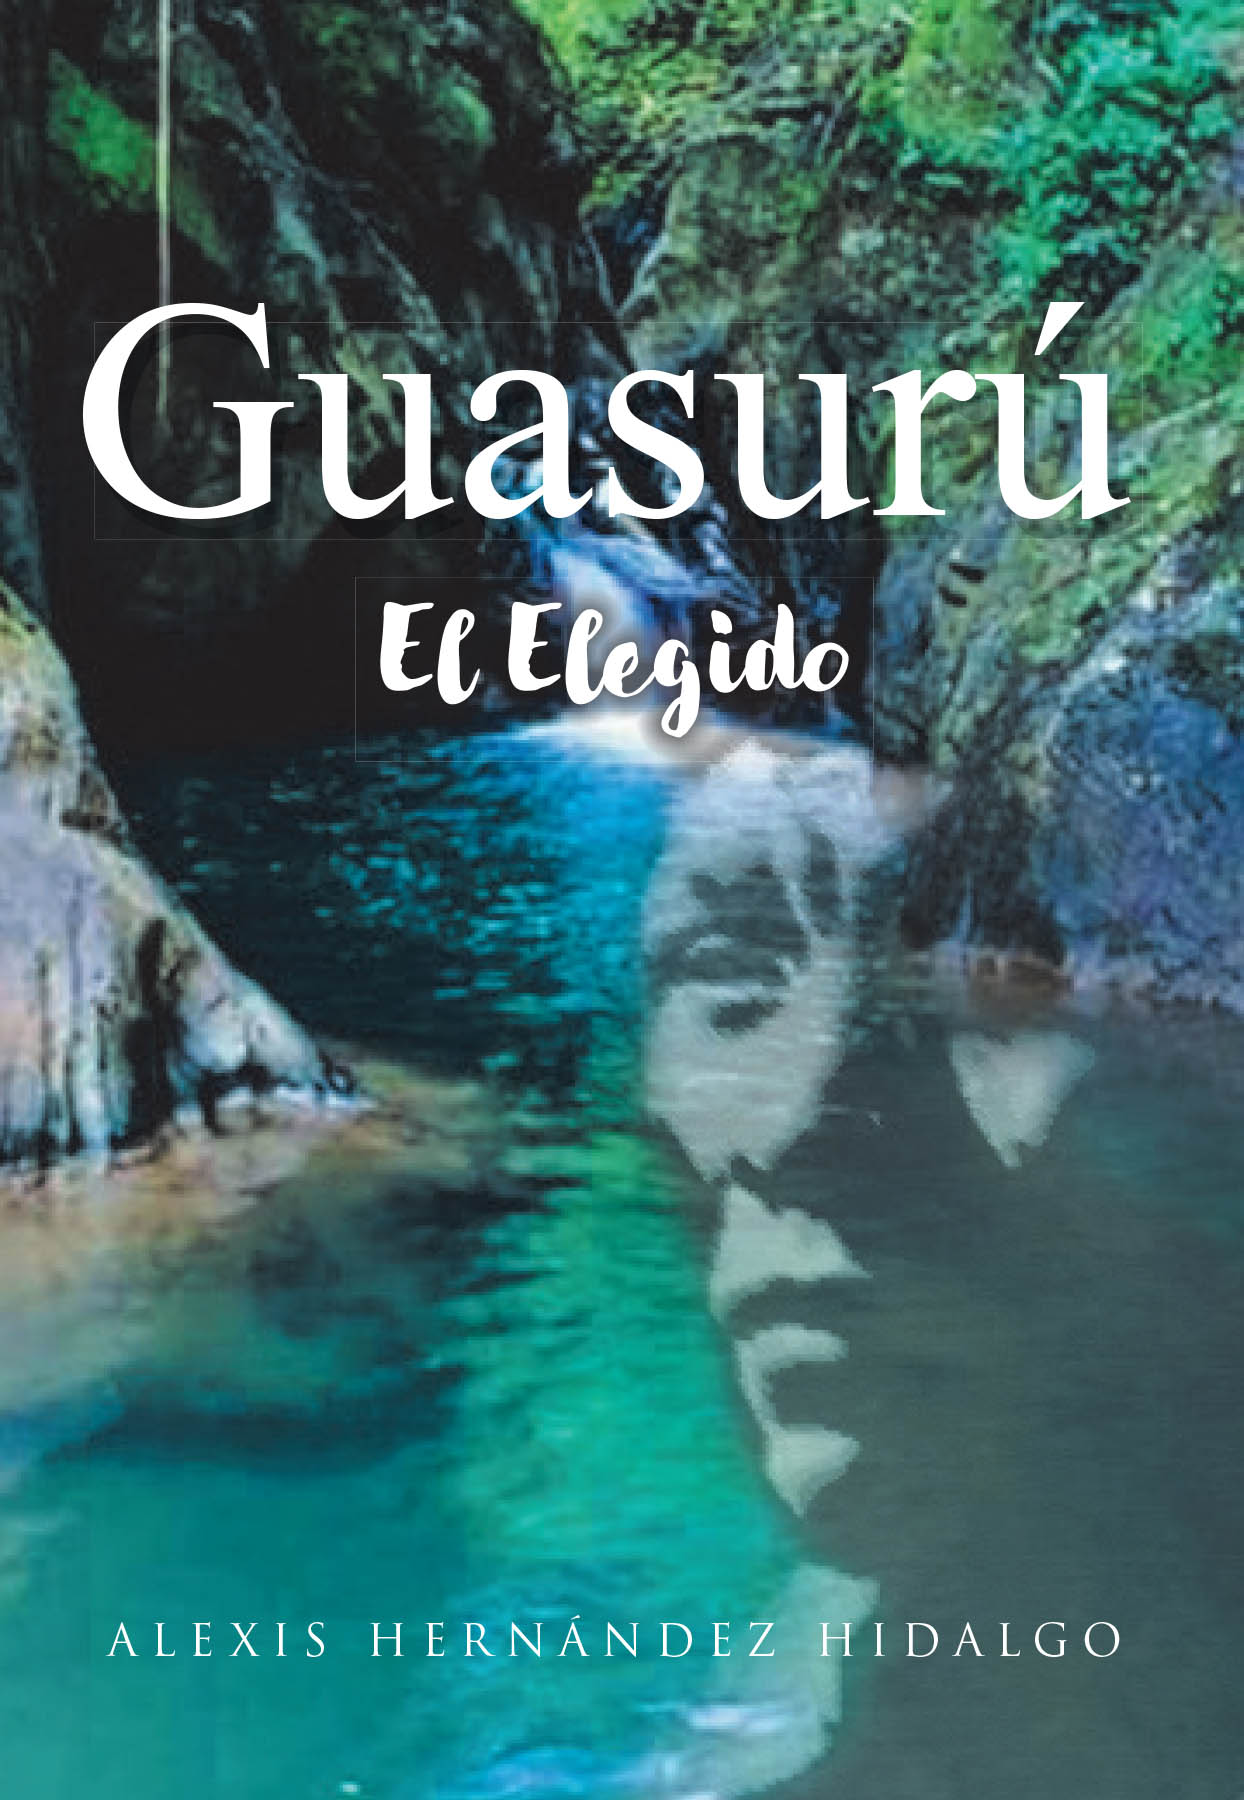 Guasurú Cover Image